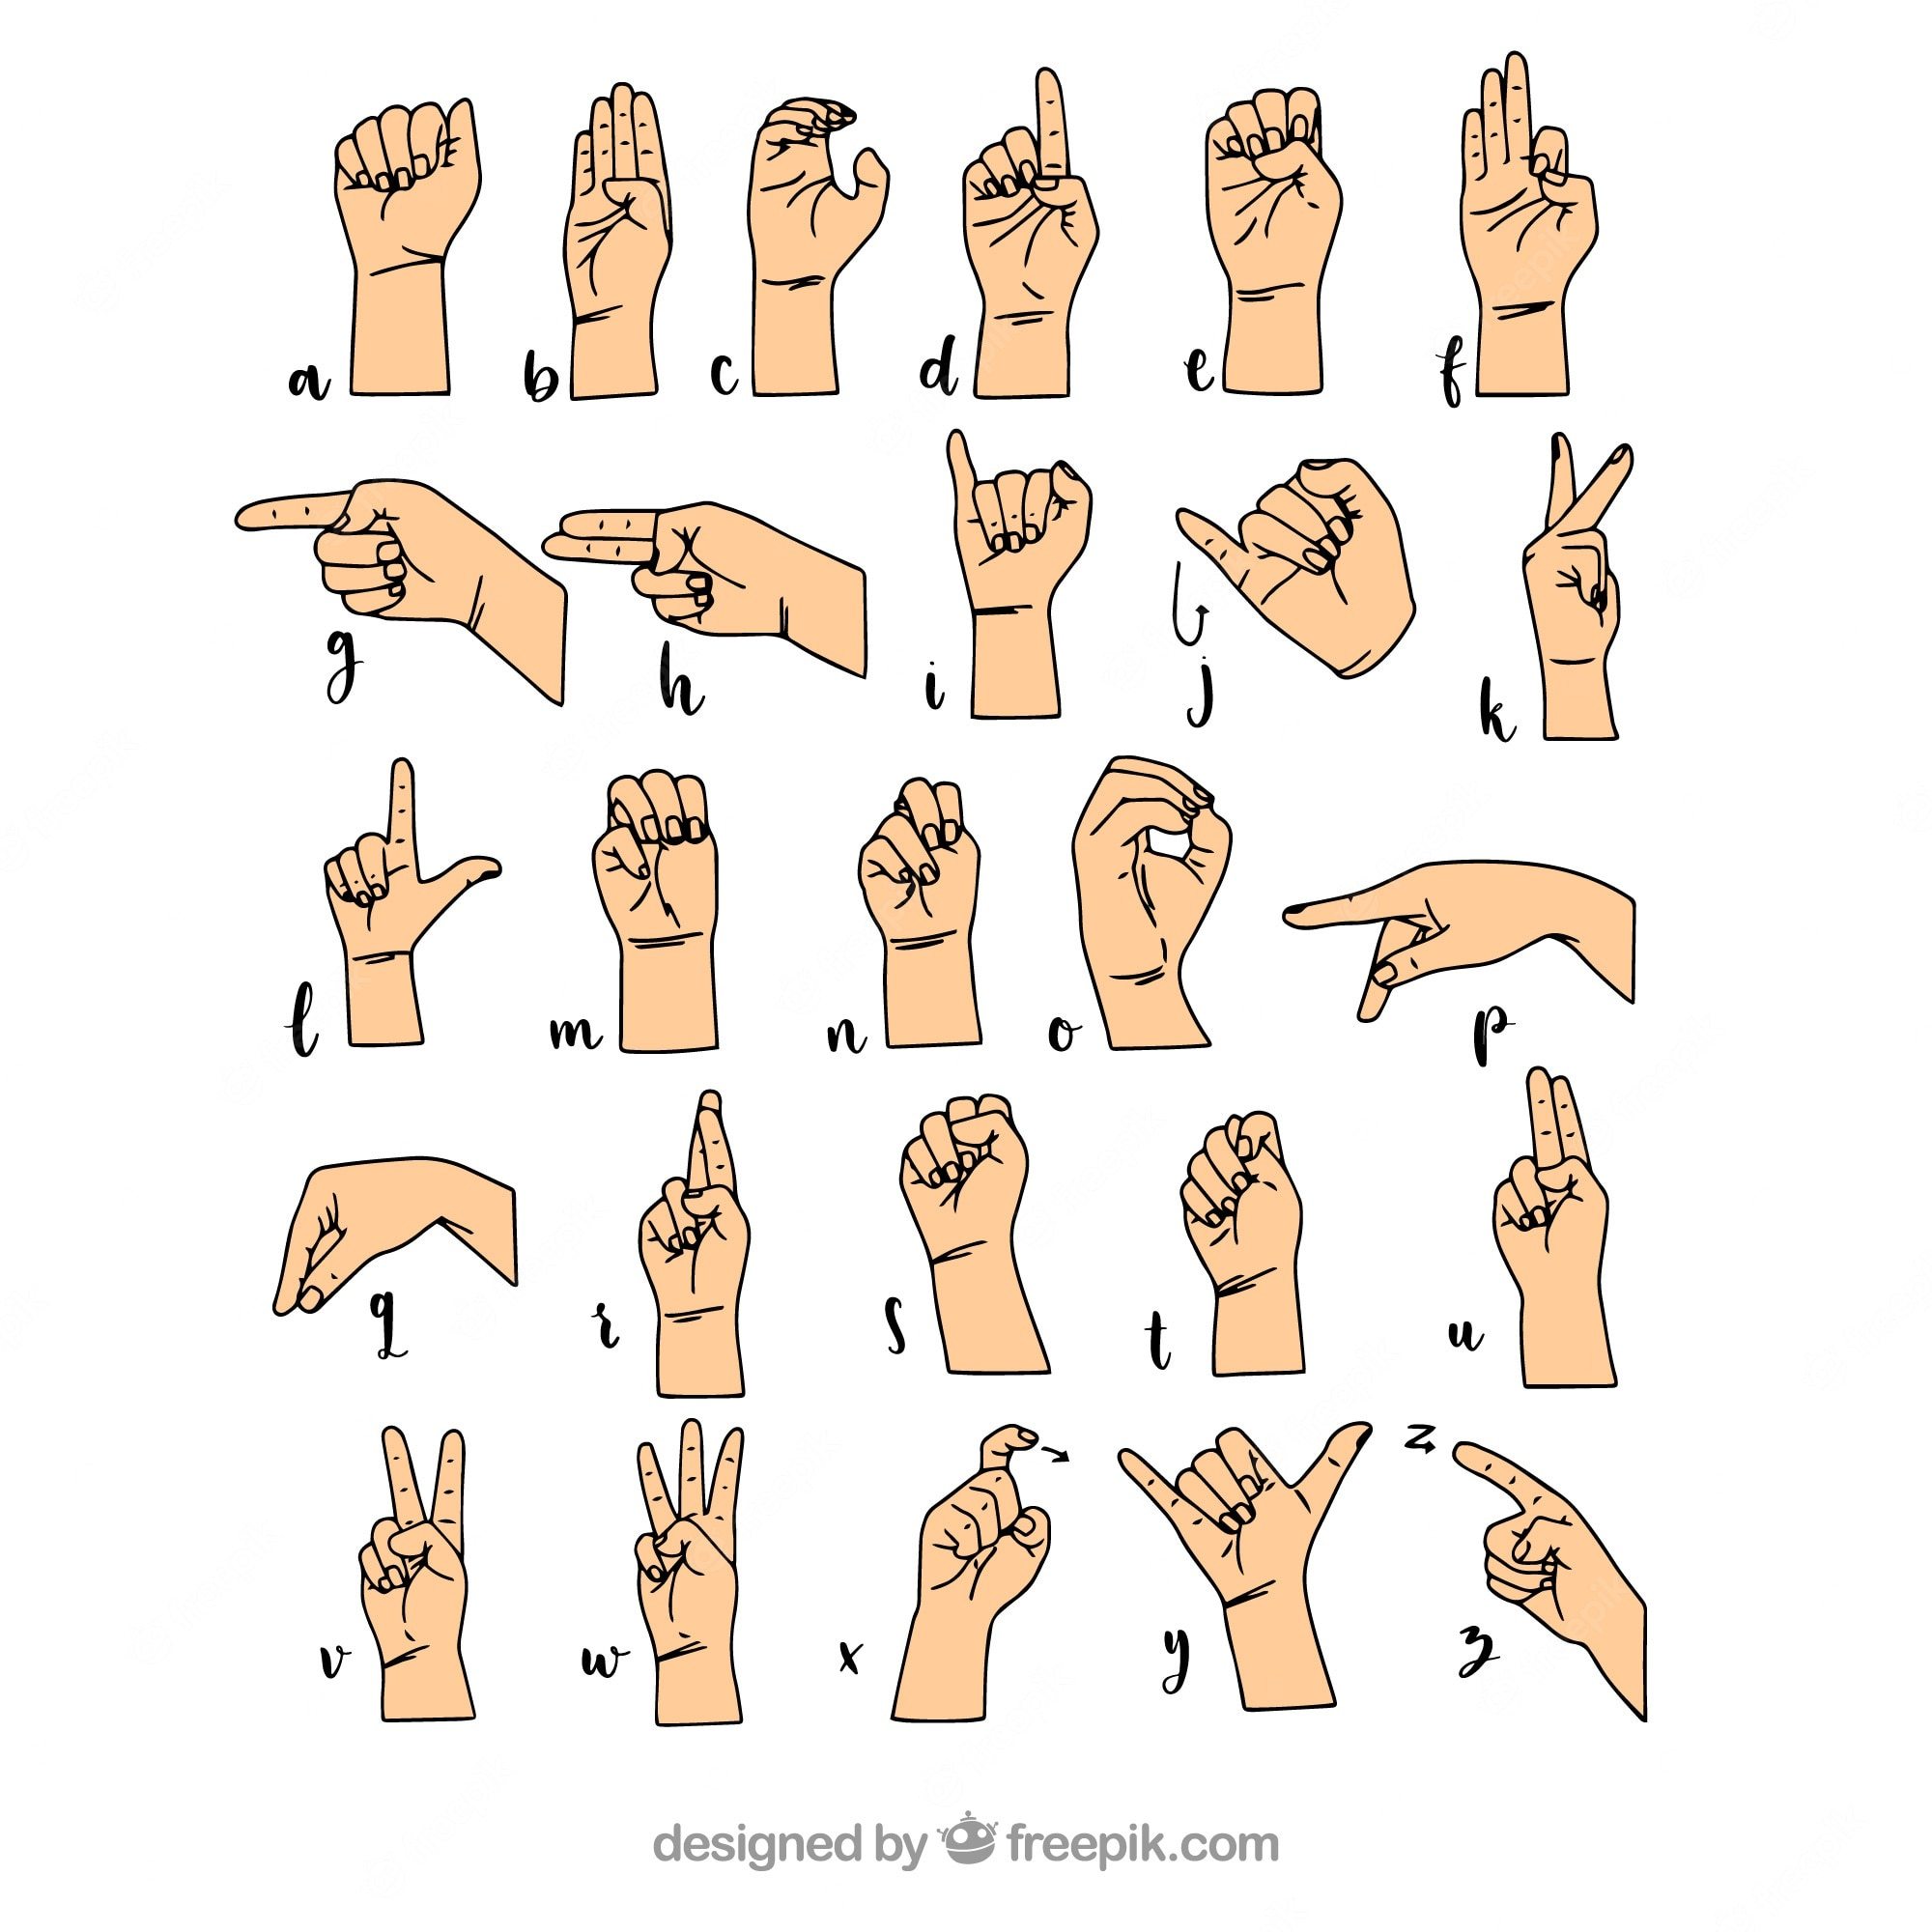 BSL (British Sign Language) - Year 6 - Quizizz